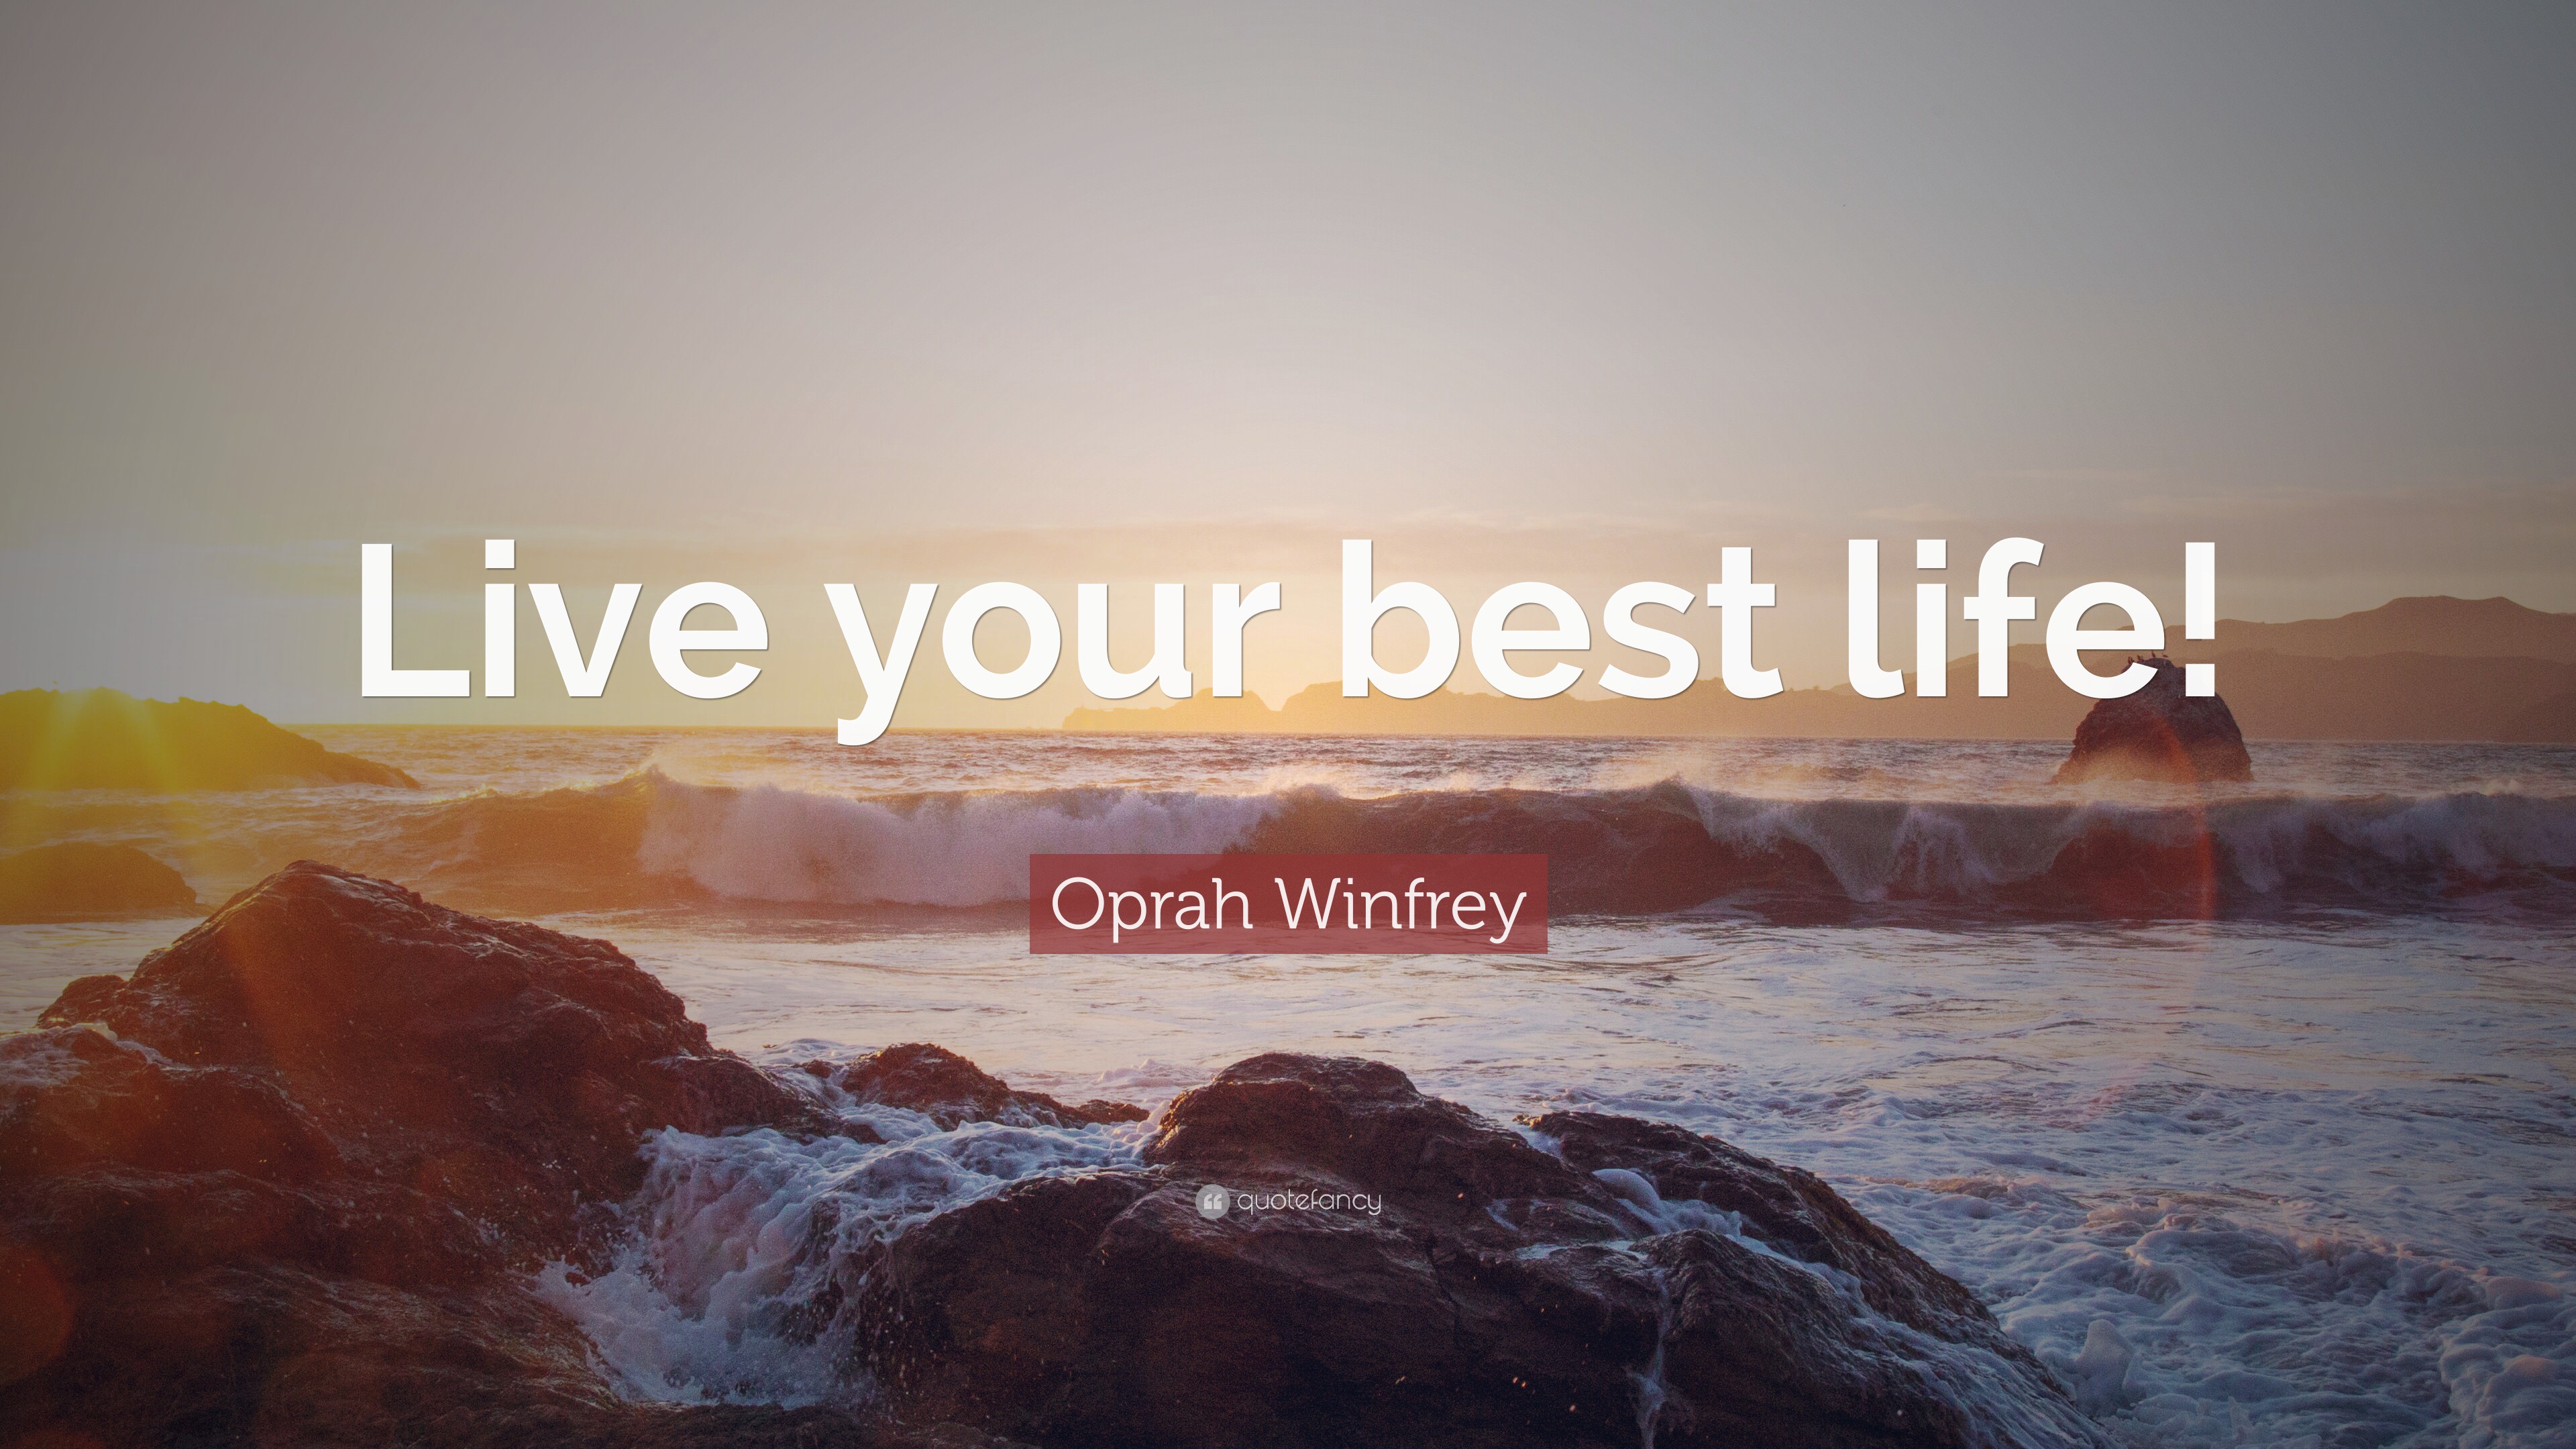 Oprah Winfrey Quote: “Live your best life!”